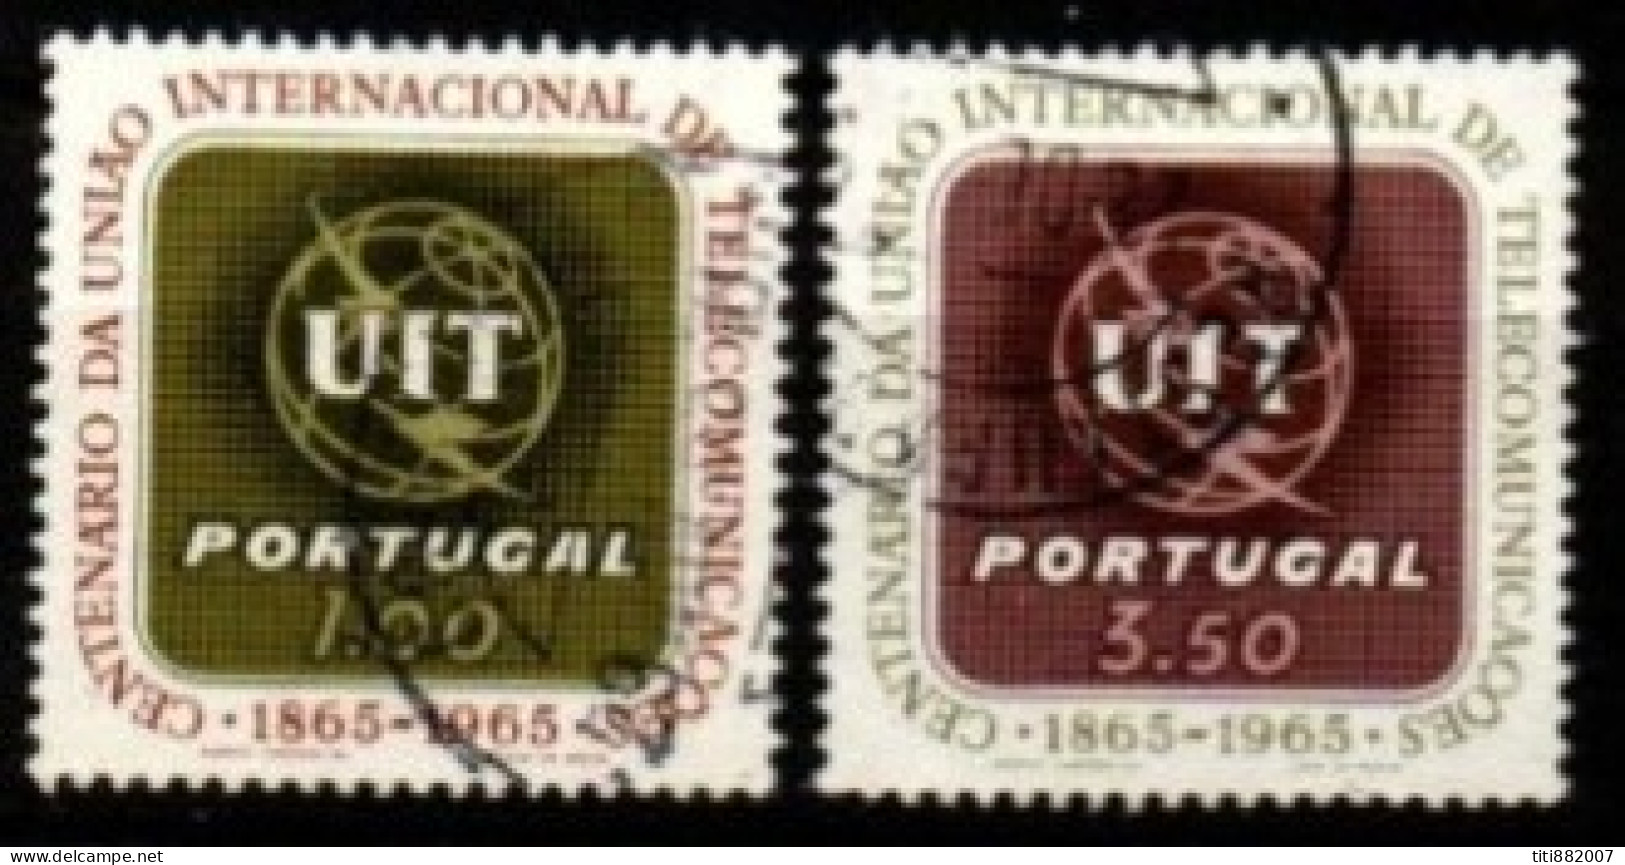 PORTUGAL  -   1965.  Y&T N° 963 / 964 Oblitérés   . U.I.T. - Used Stamps